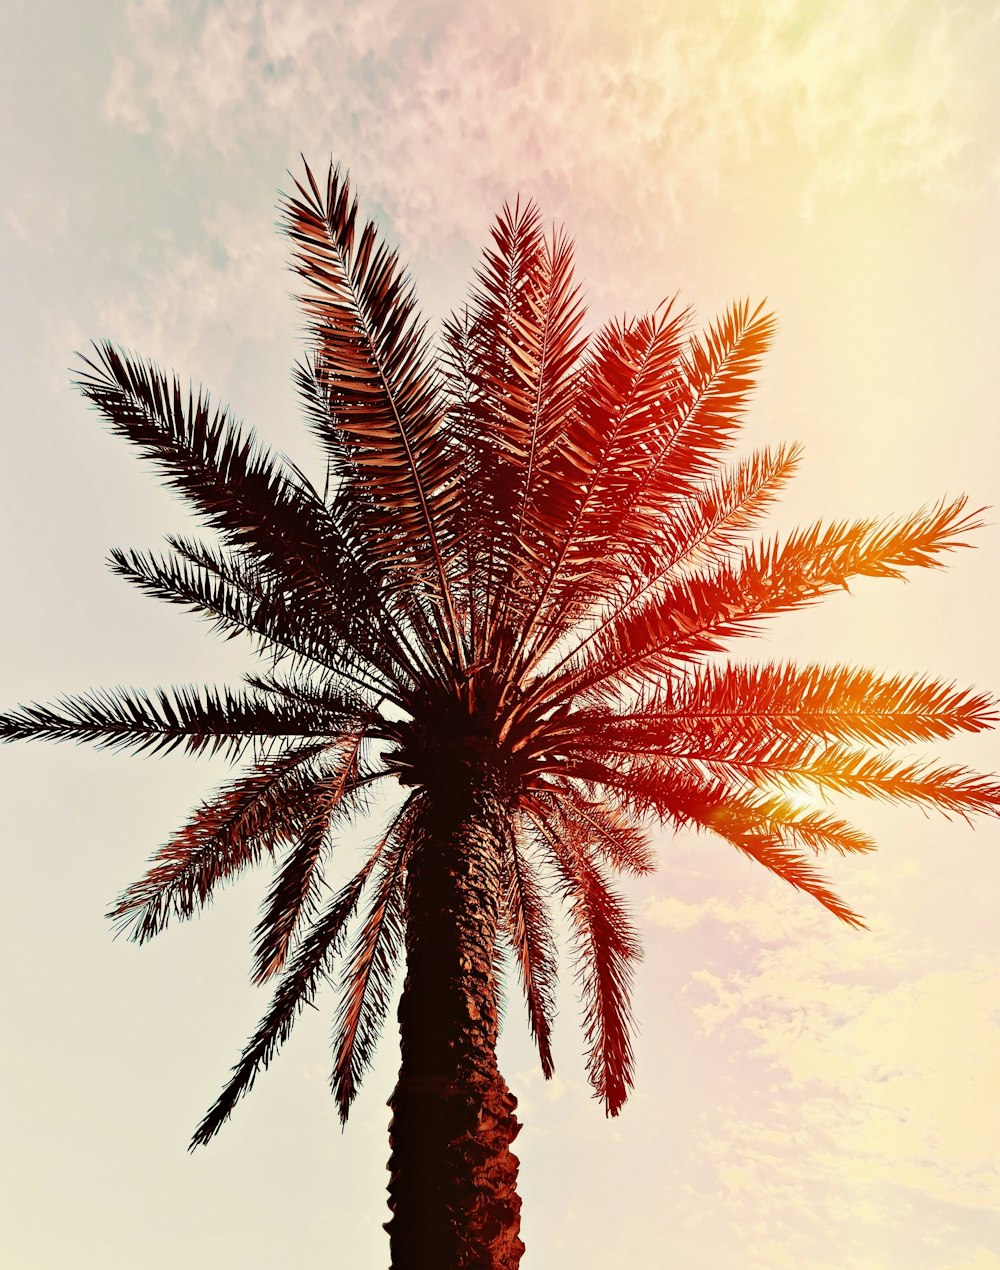 a close up of a palm tree